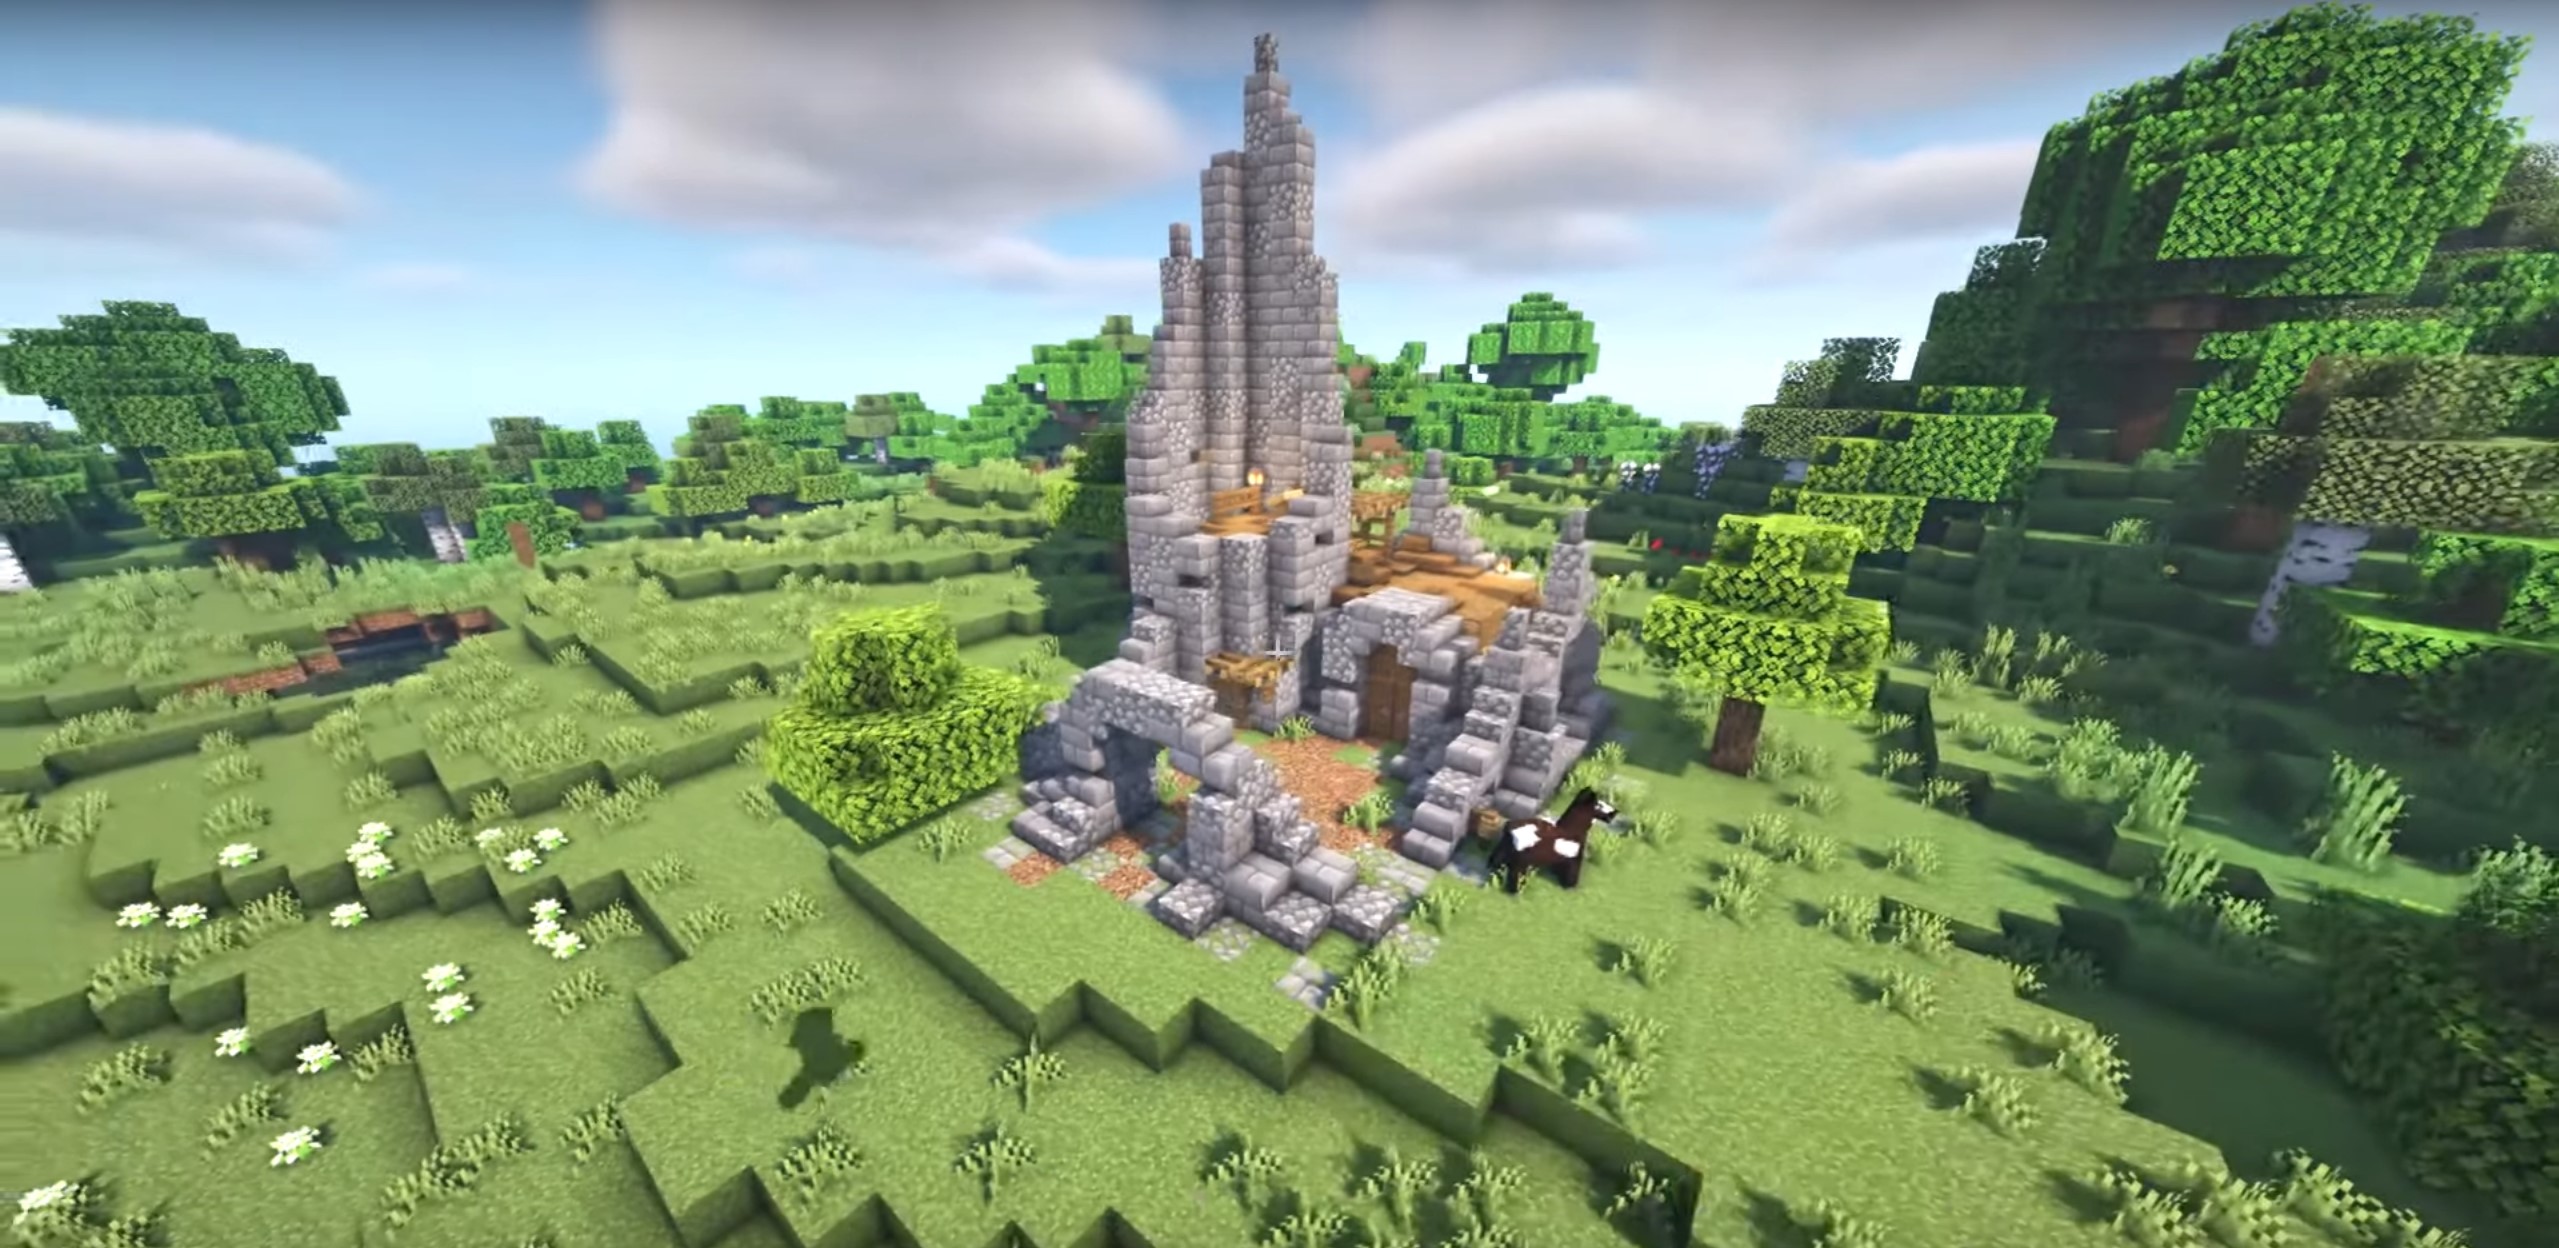 Castle Ruins minecraft building idea